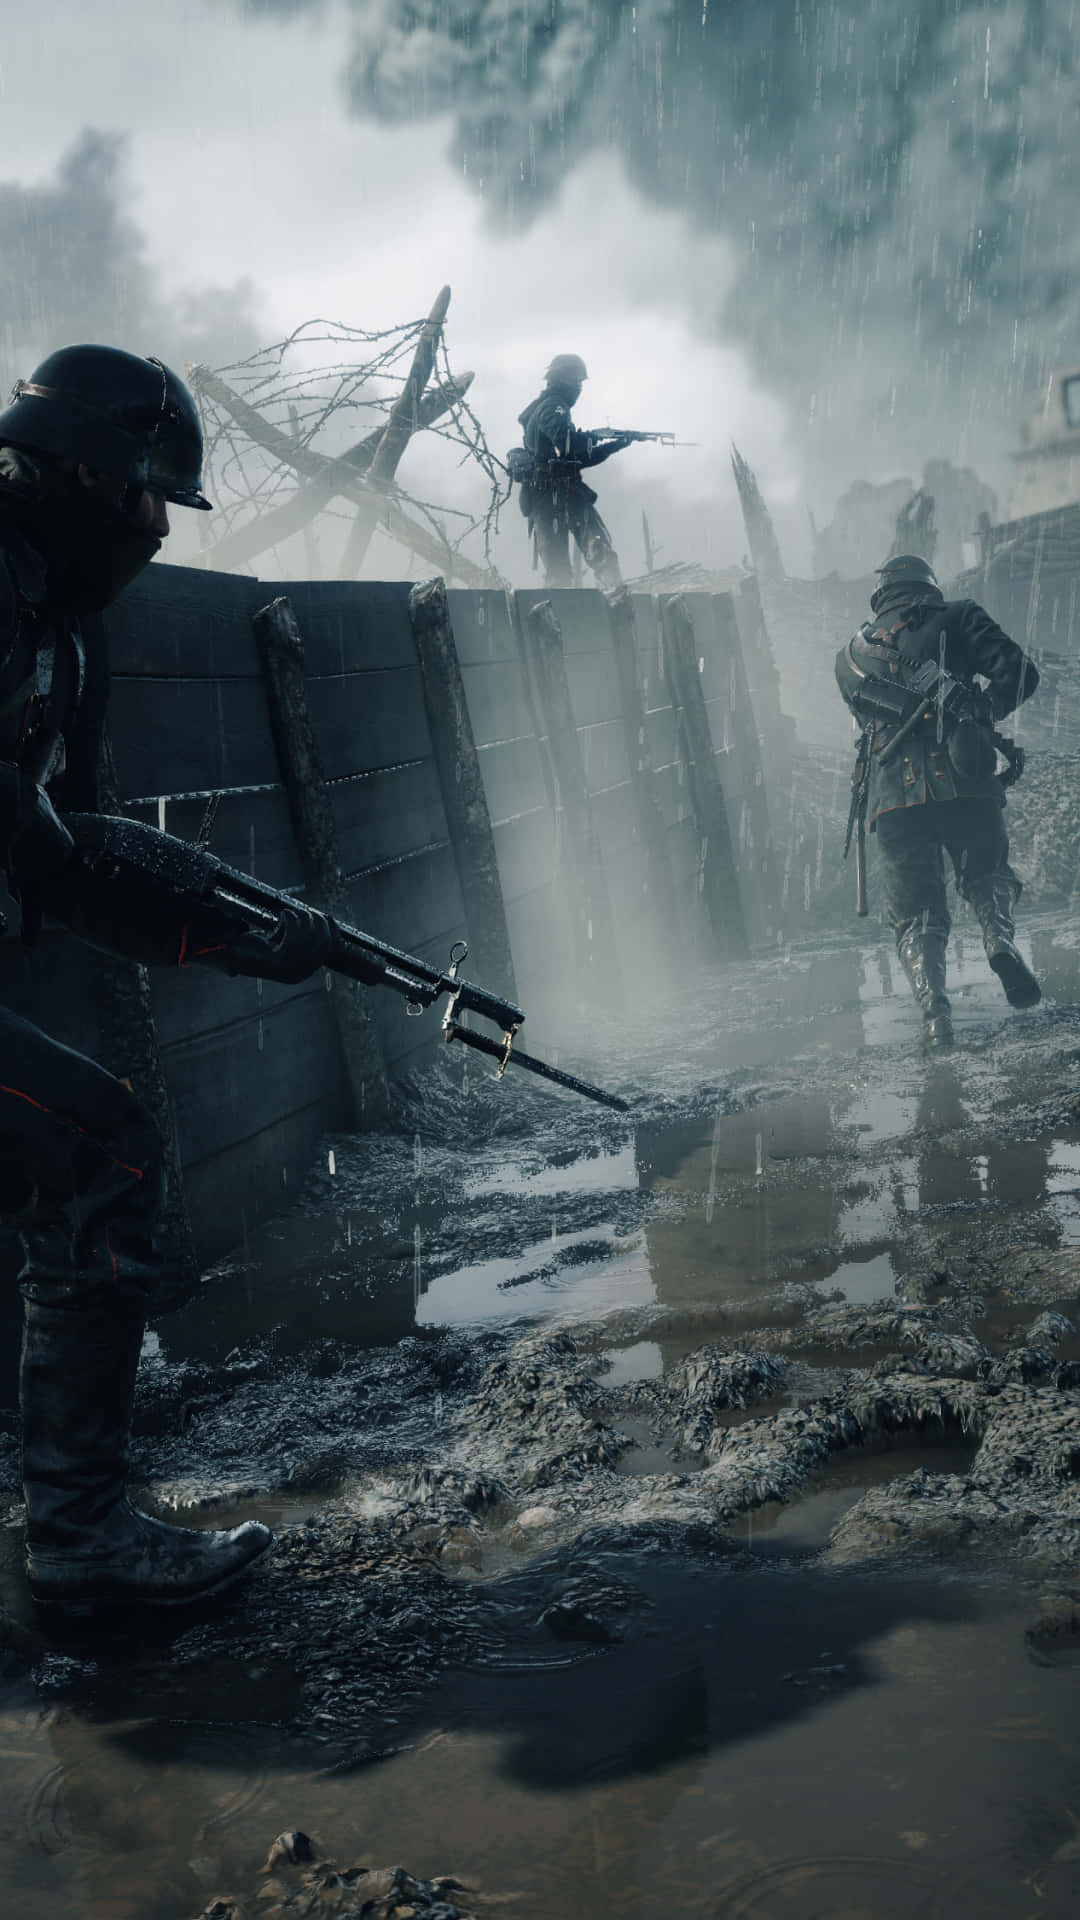 Pixel3xl Bakgrundsbild Med Battlefield 1: Soldater I En Lerig Barrikad.